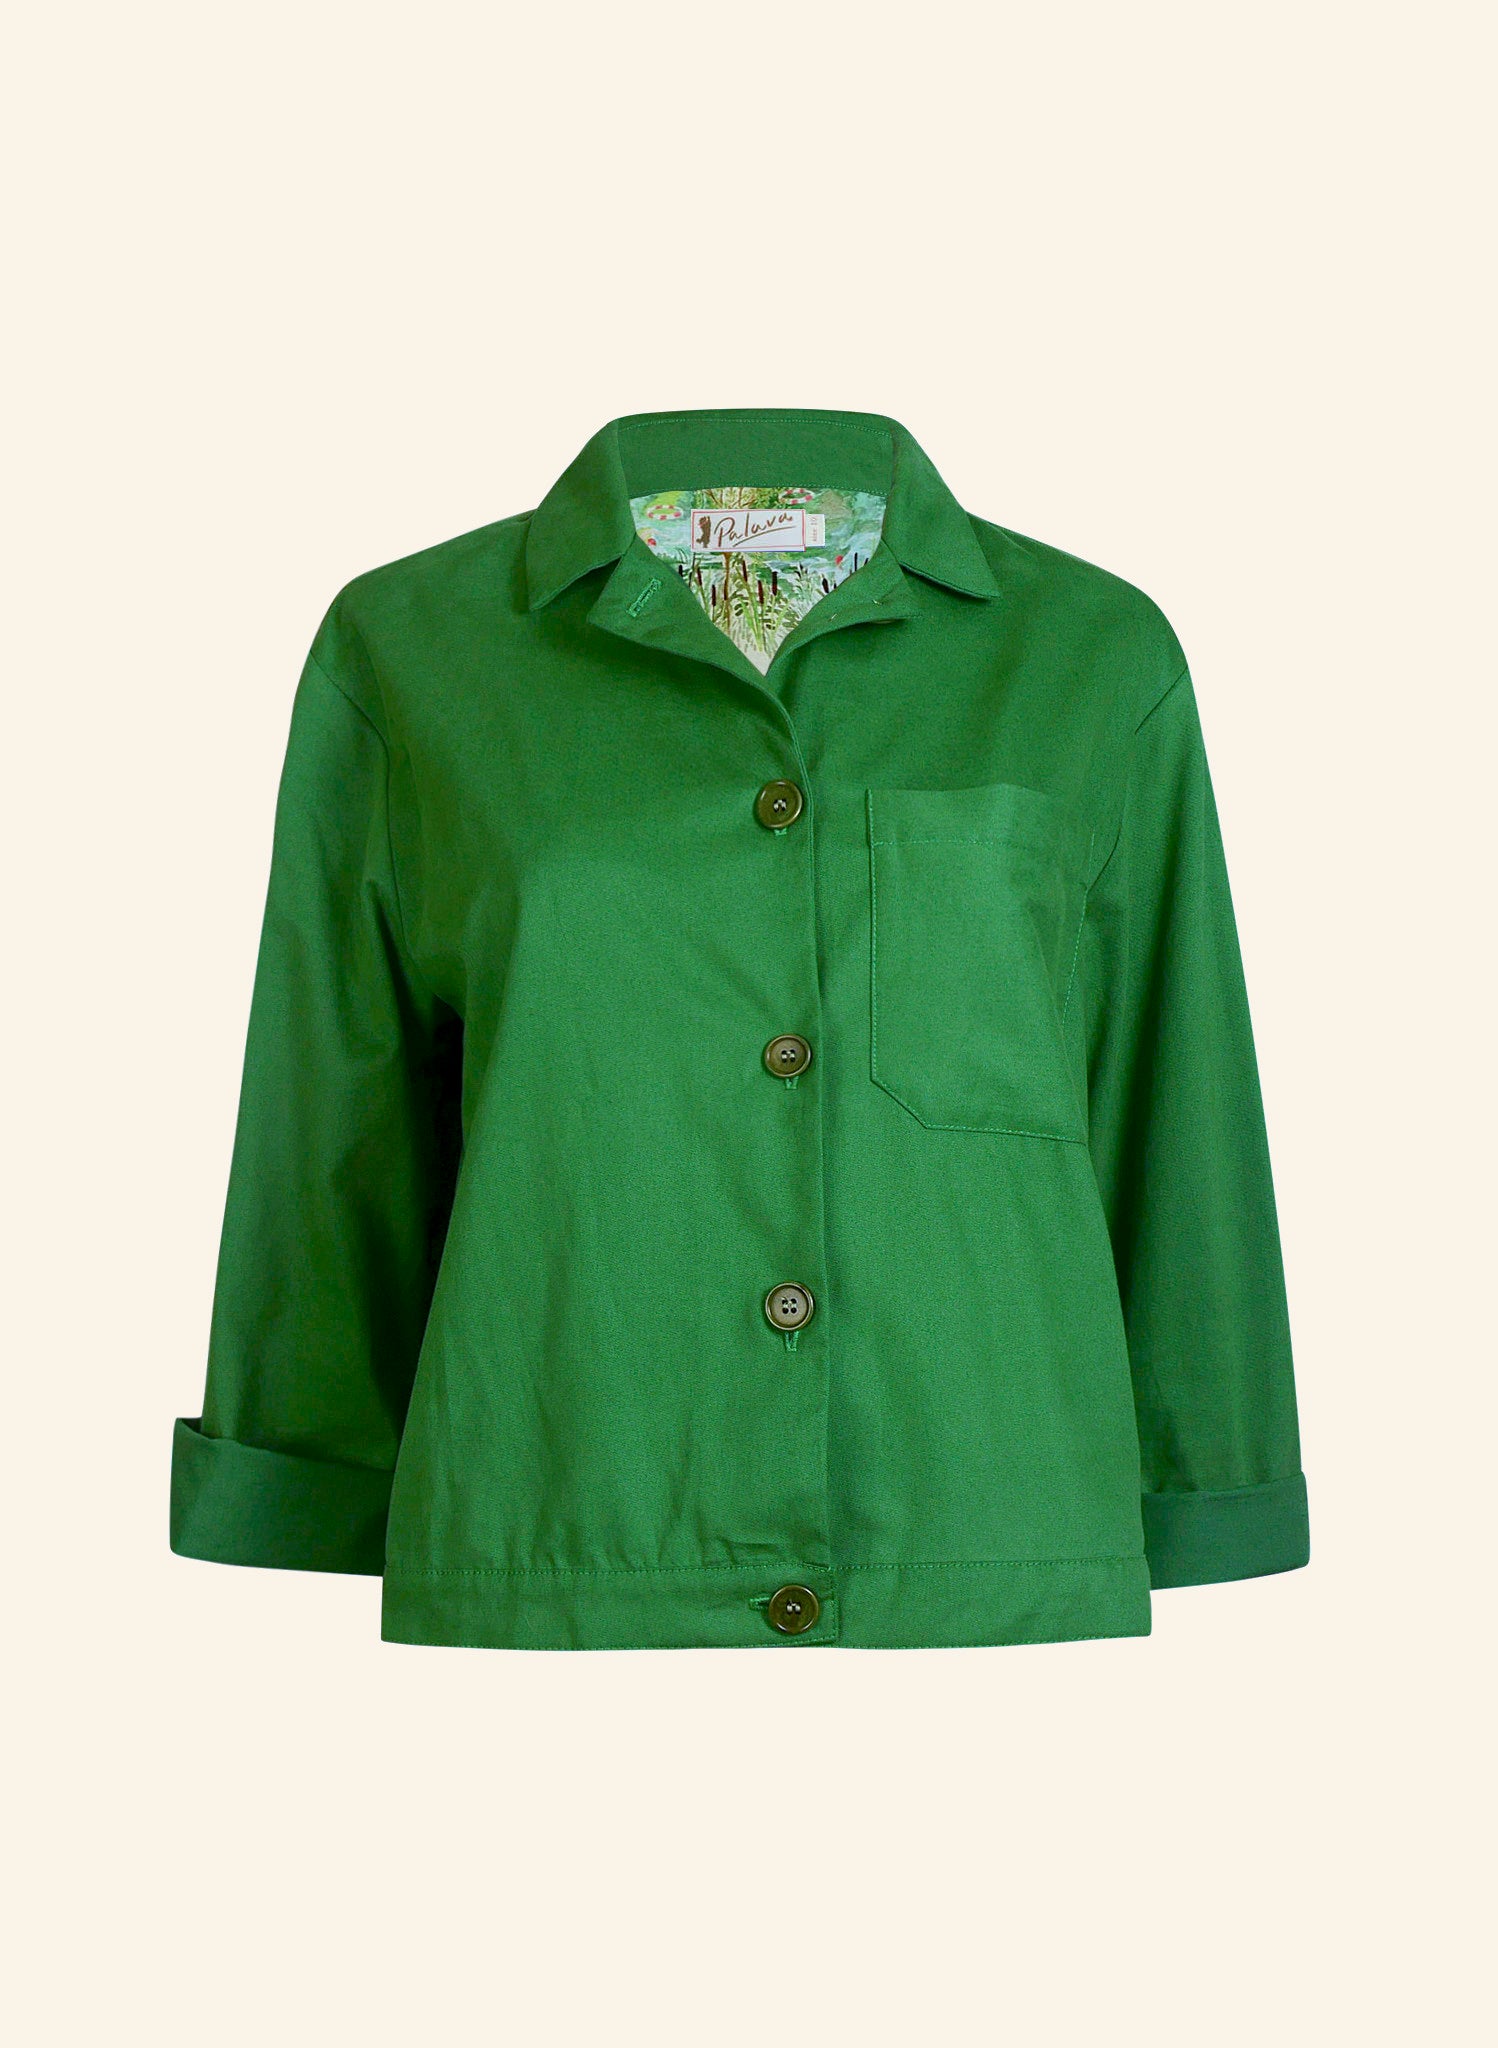 Walter Workwear Jacket - Green Cotton